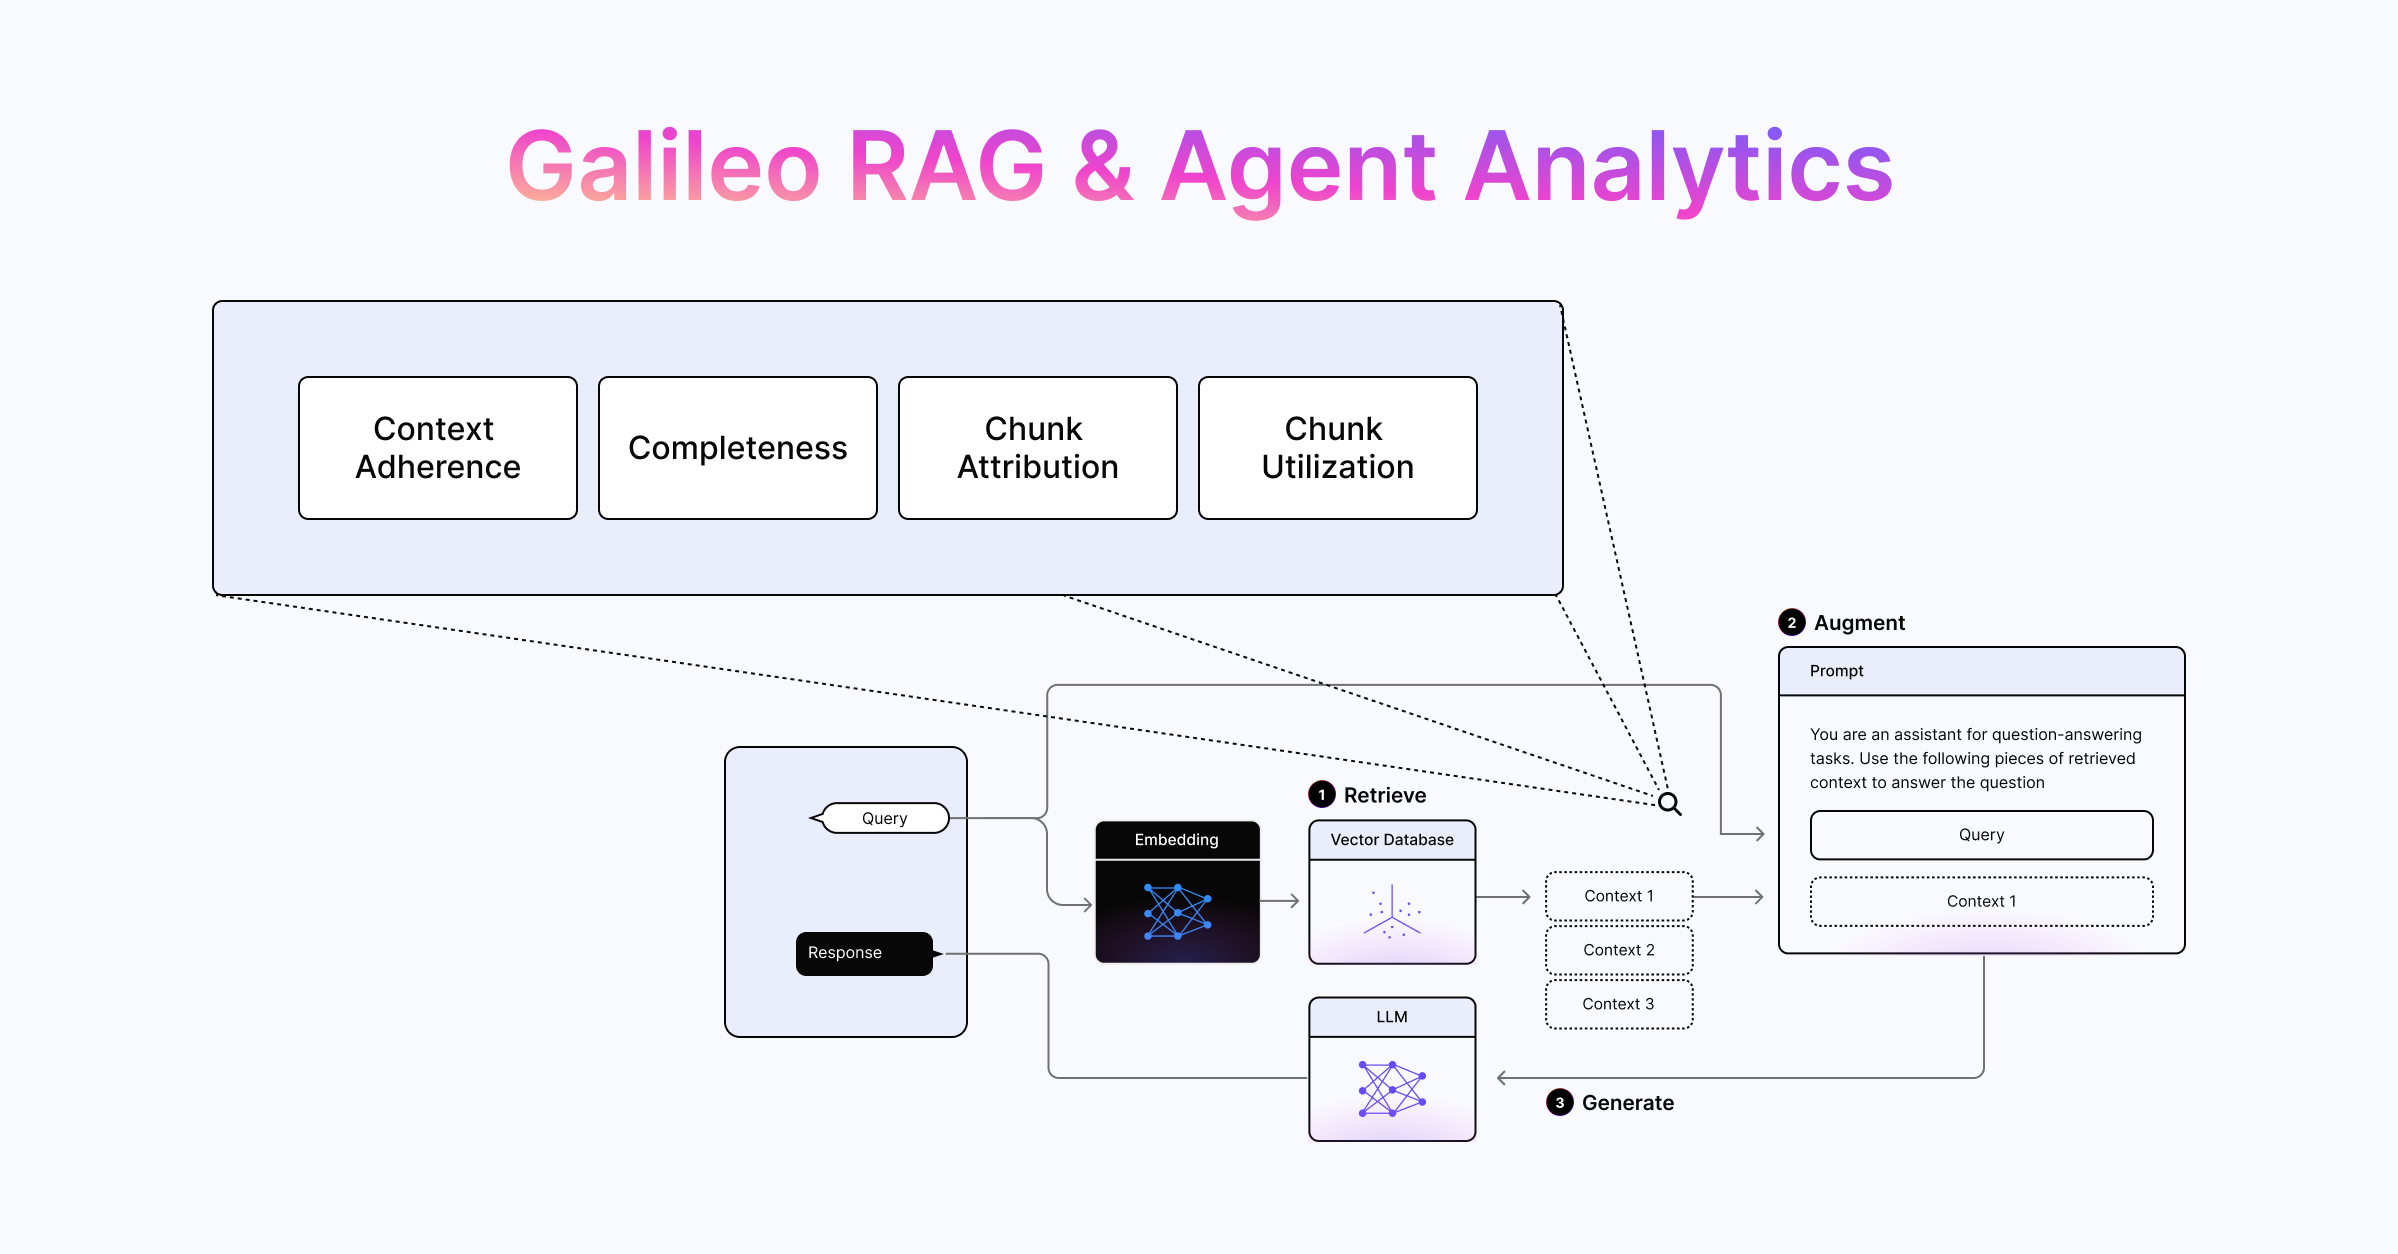 Galileo RAG & Agent Analytics